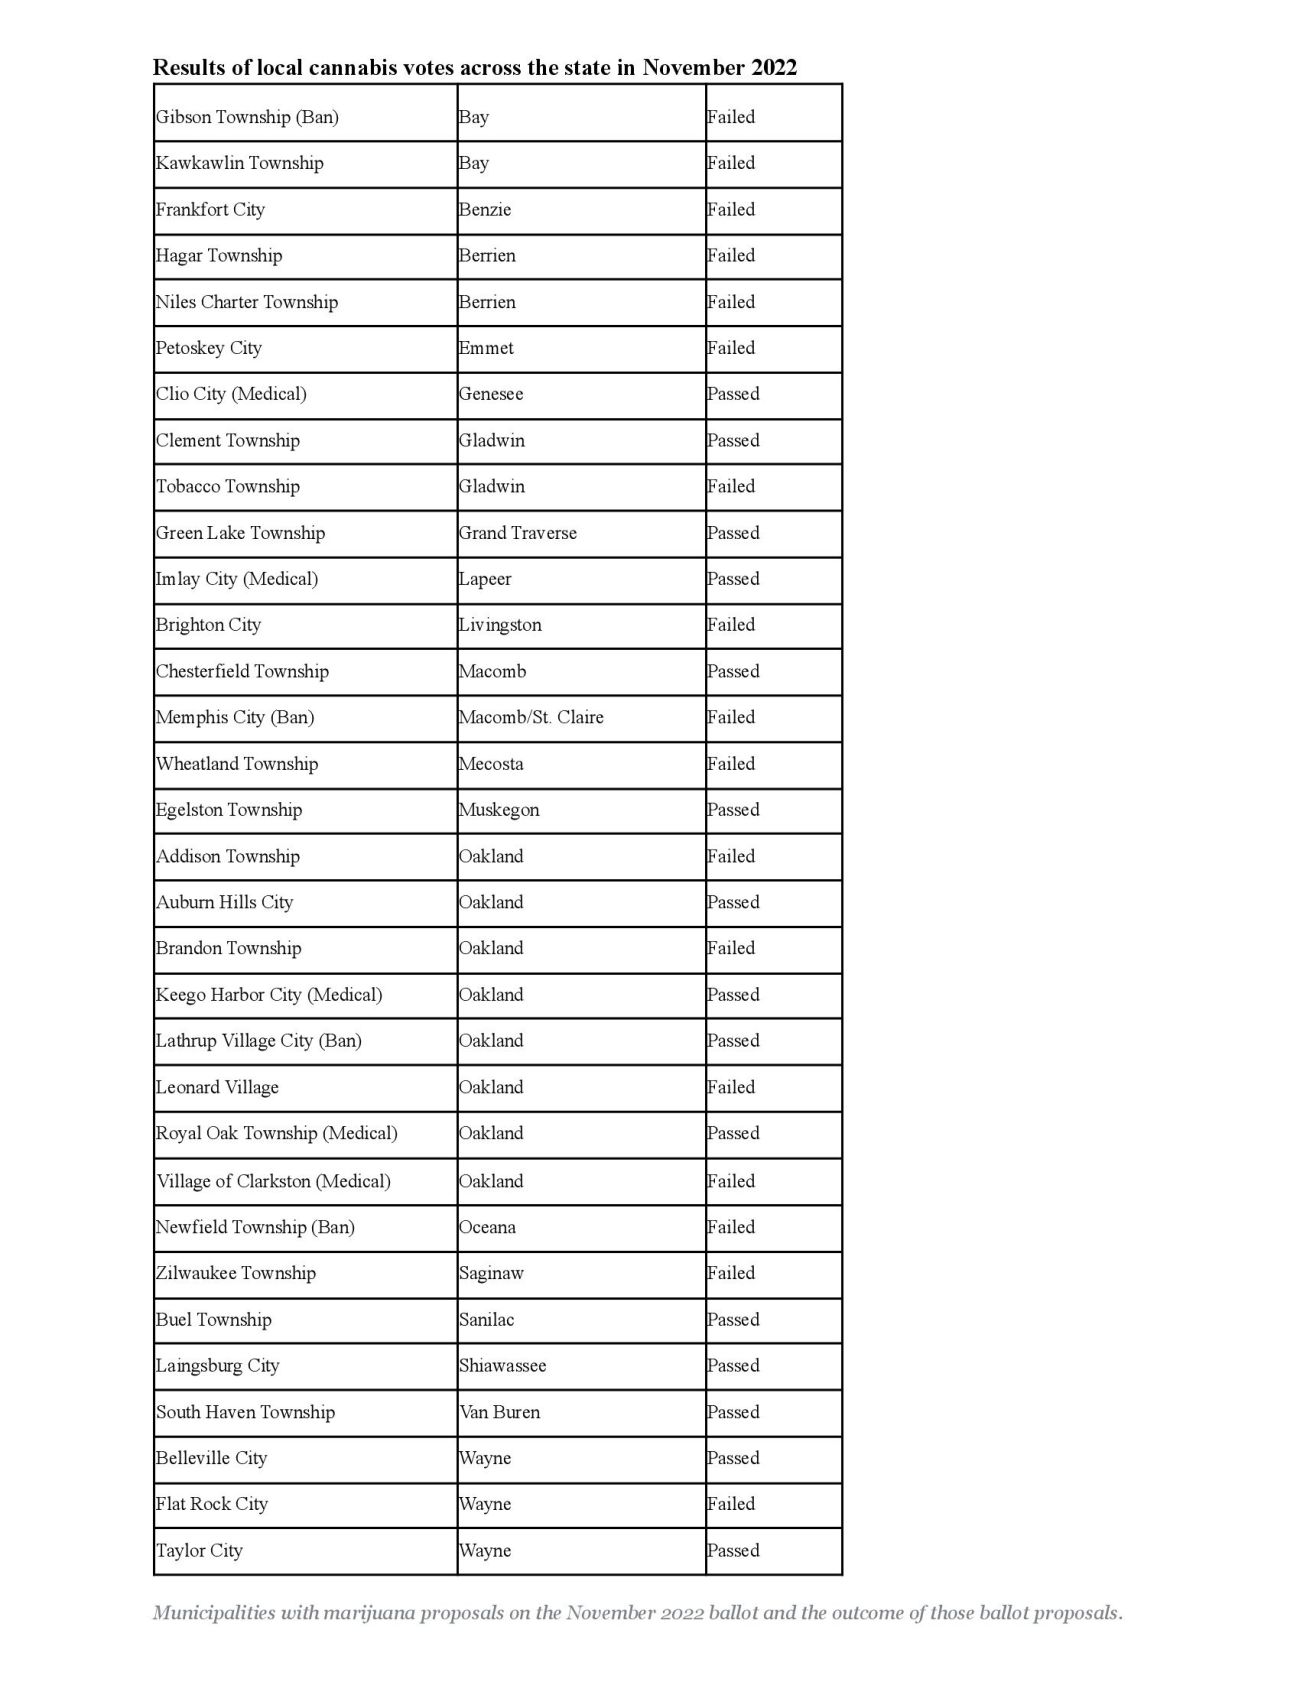 list of municipalities